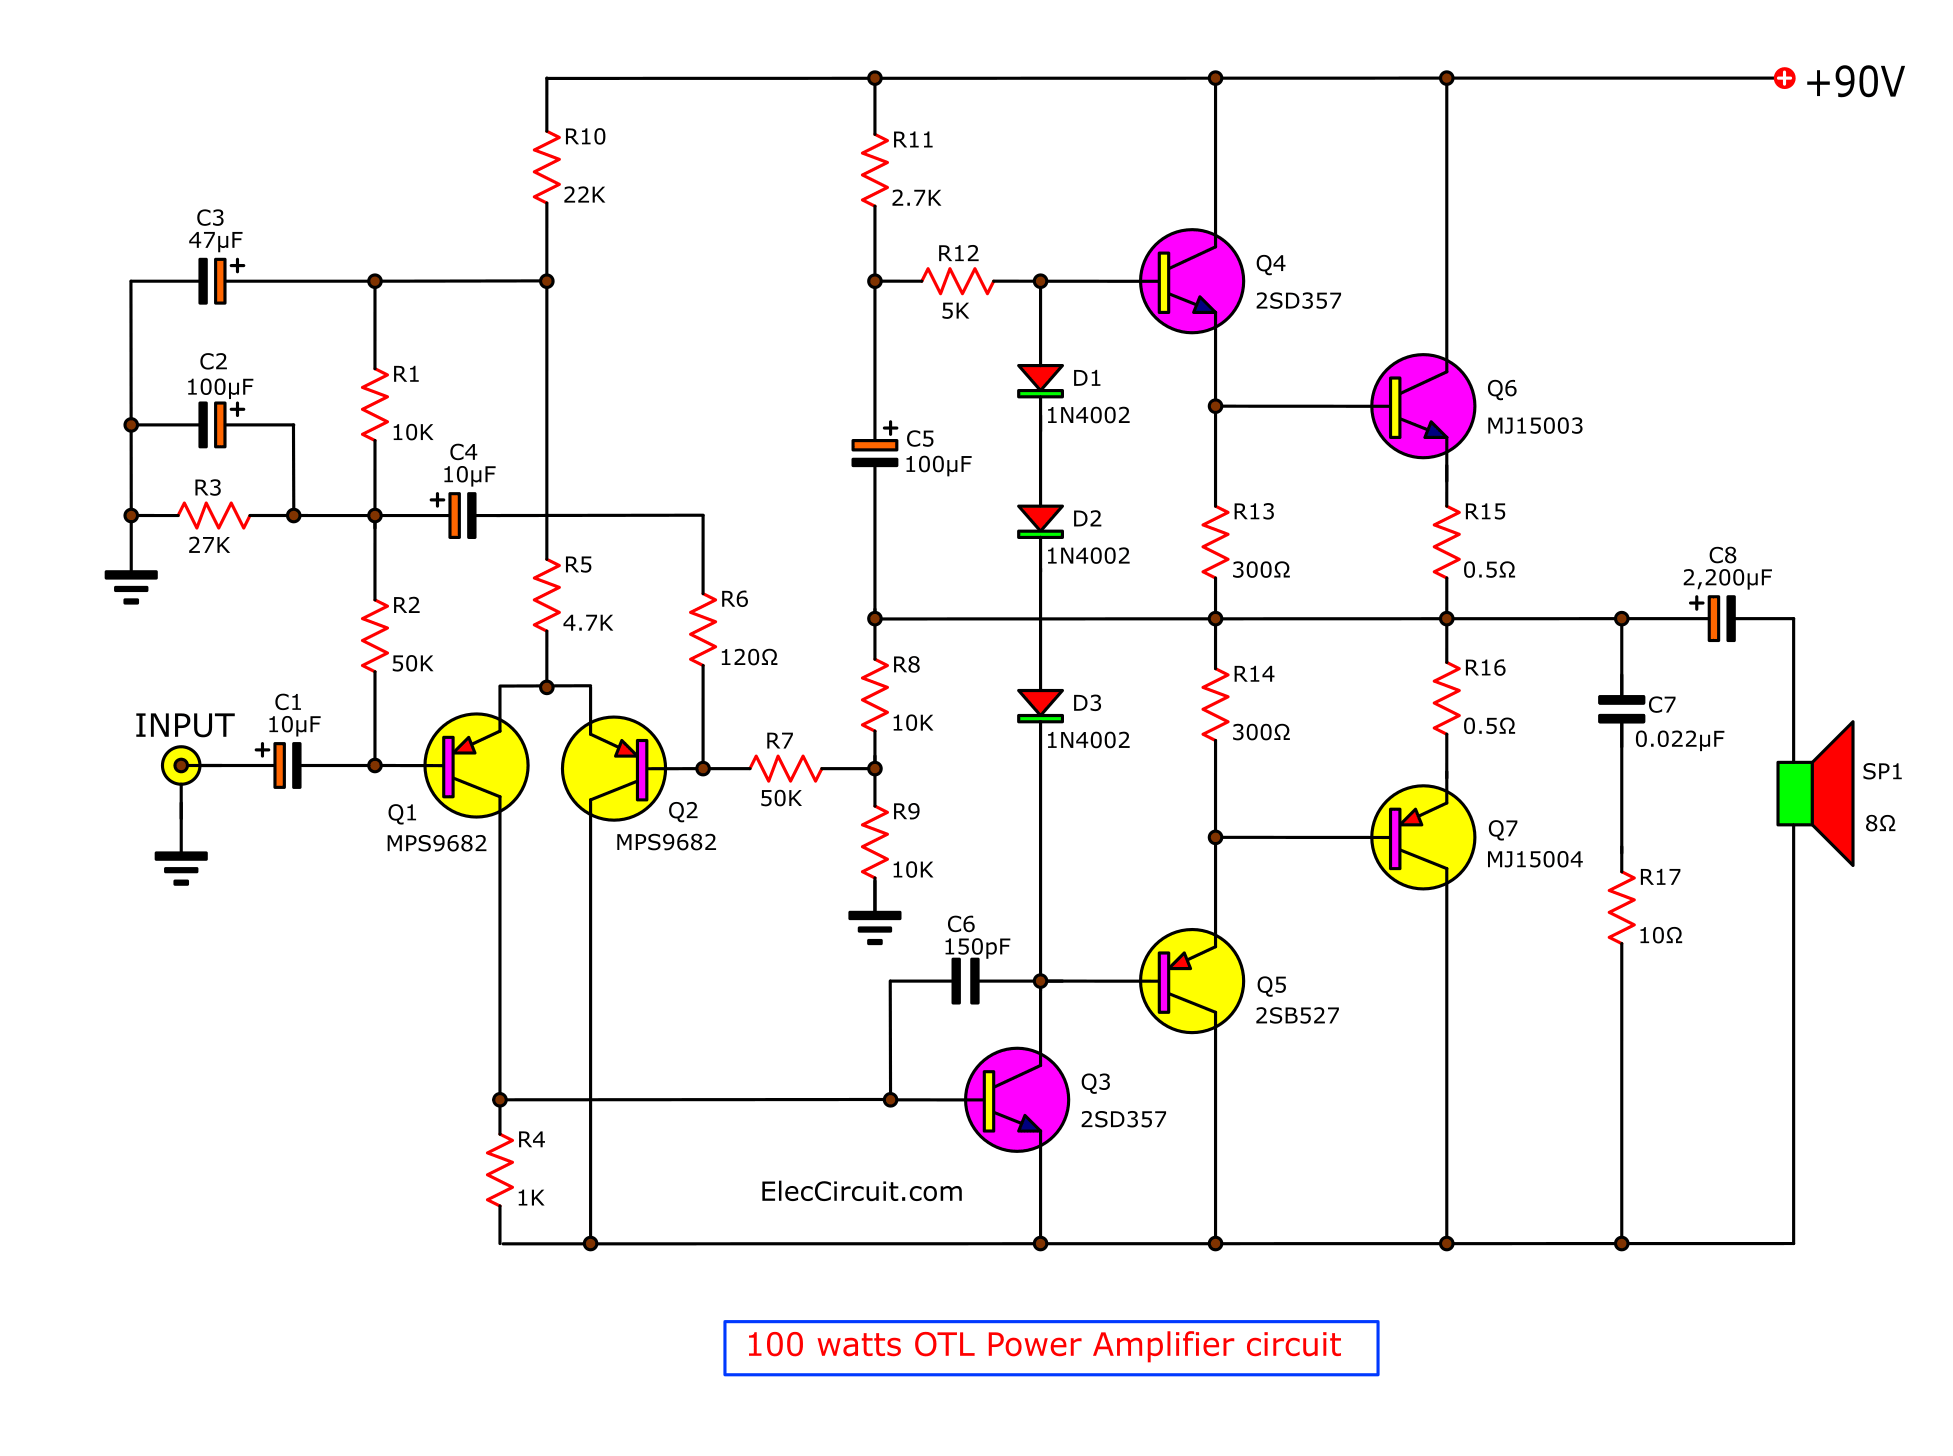 Pcb Layout Pioneer Power Amplifier Circuit Diagram - Pcb ...